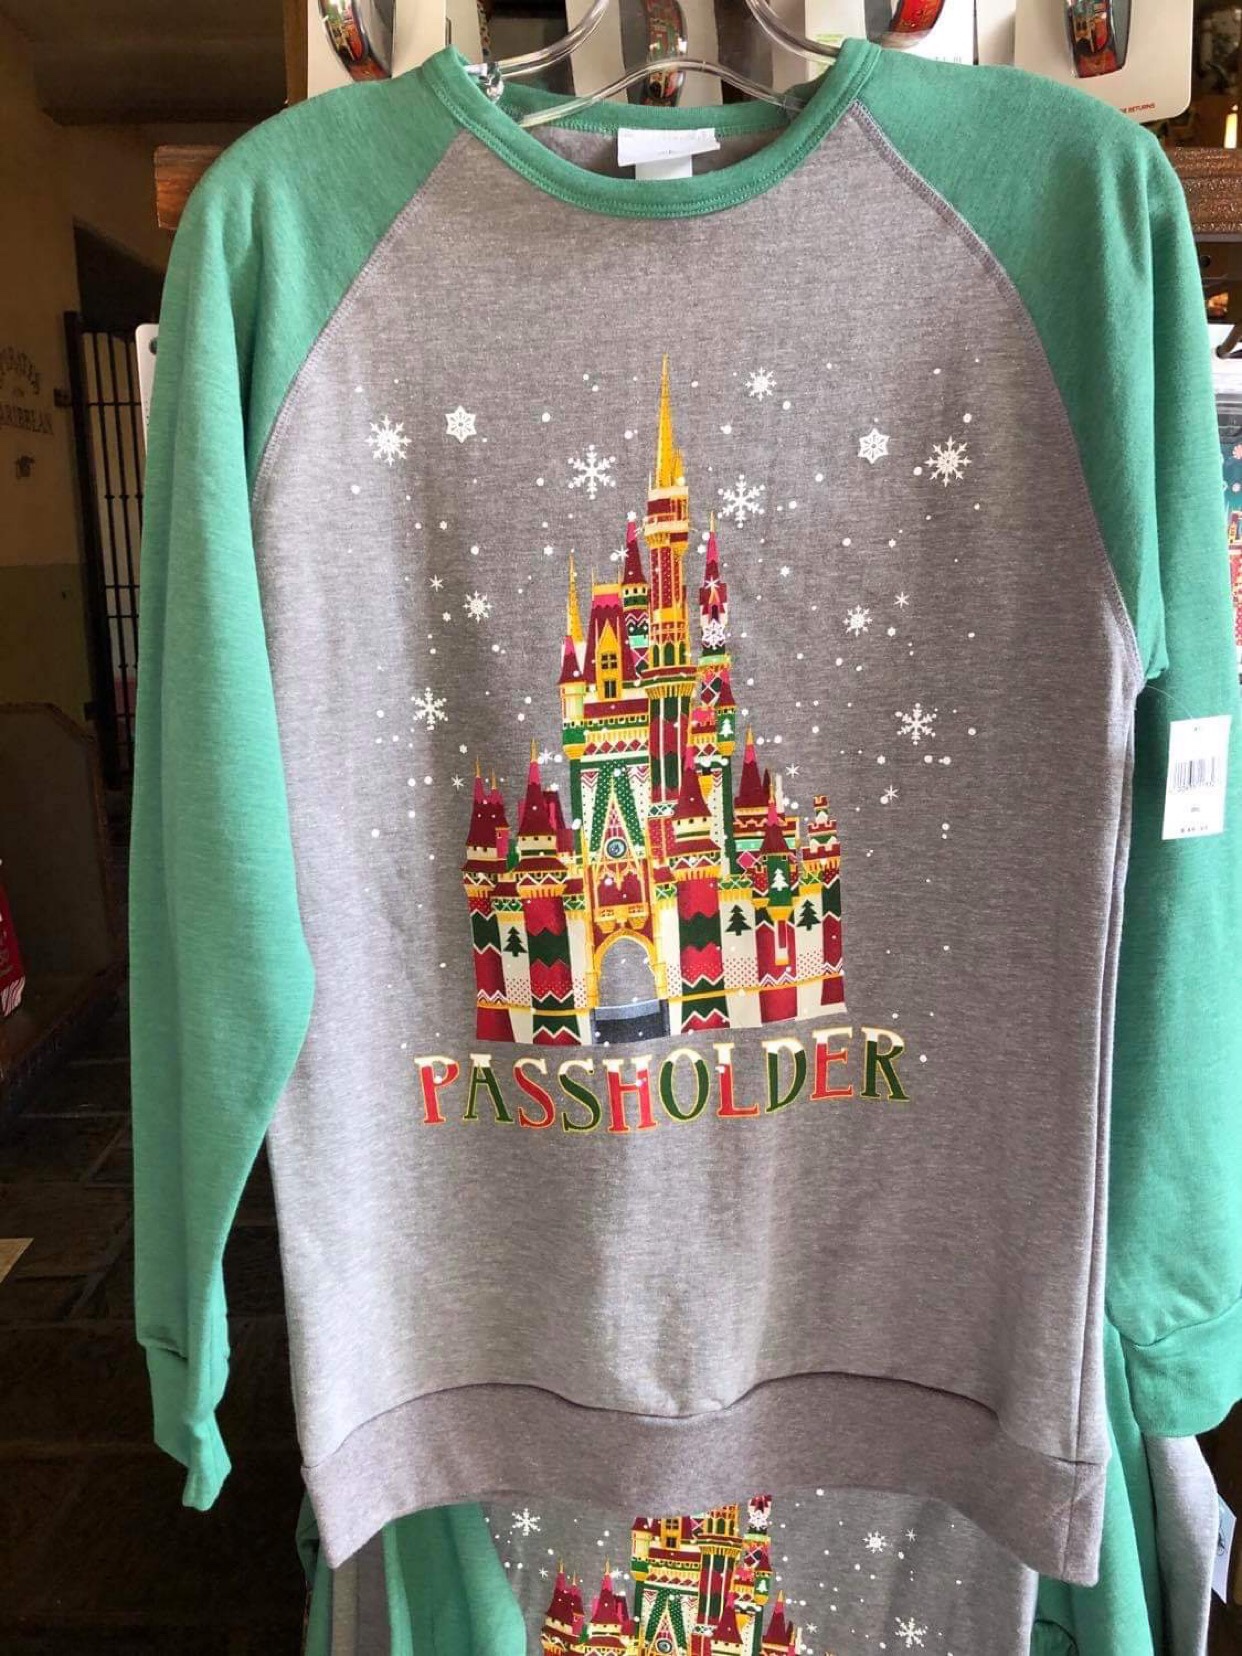 Annual Passholder Holiday Merchandise at Walt Disney World Fashion